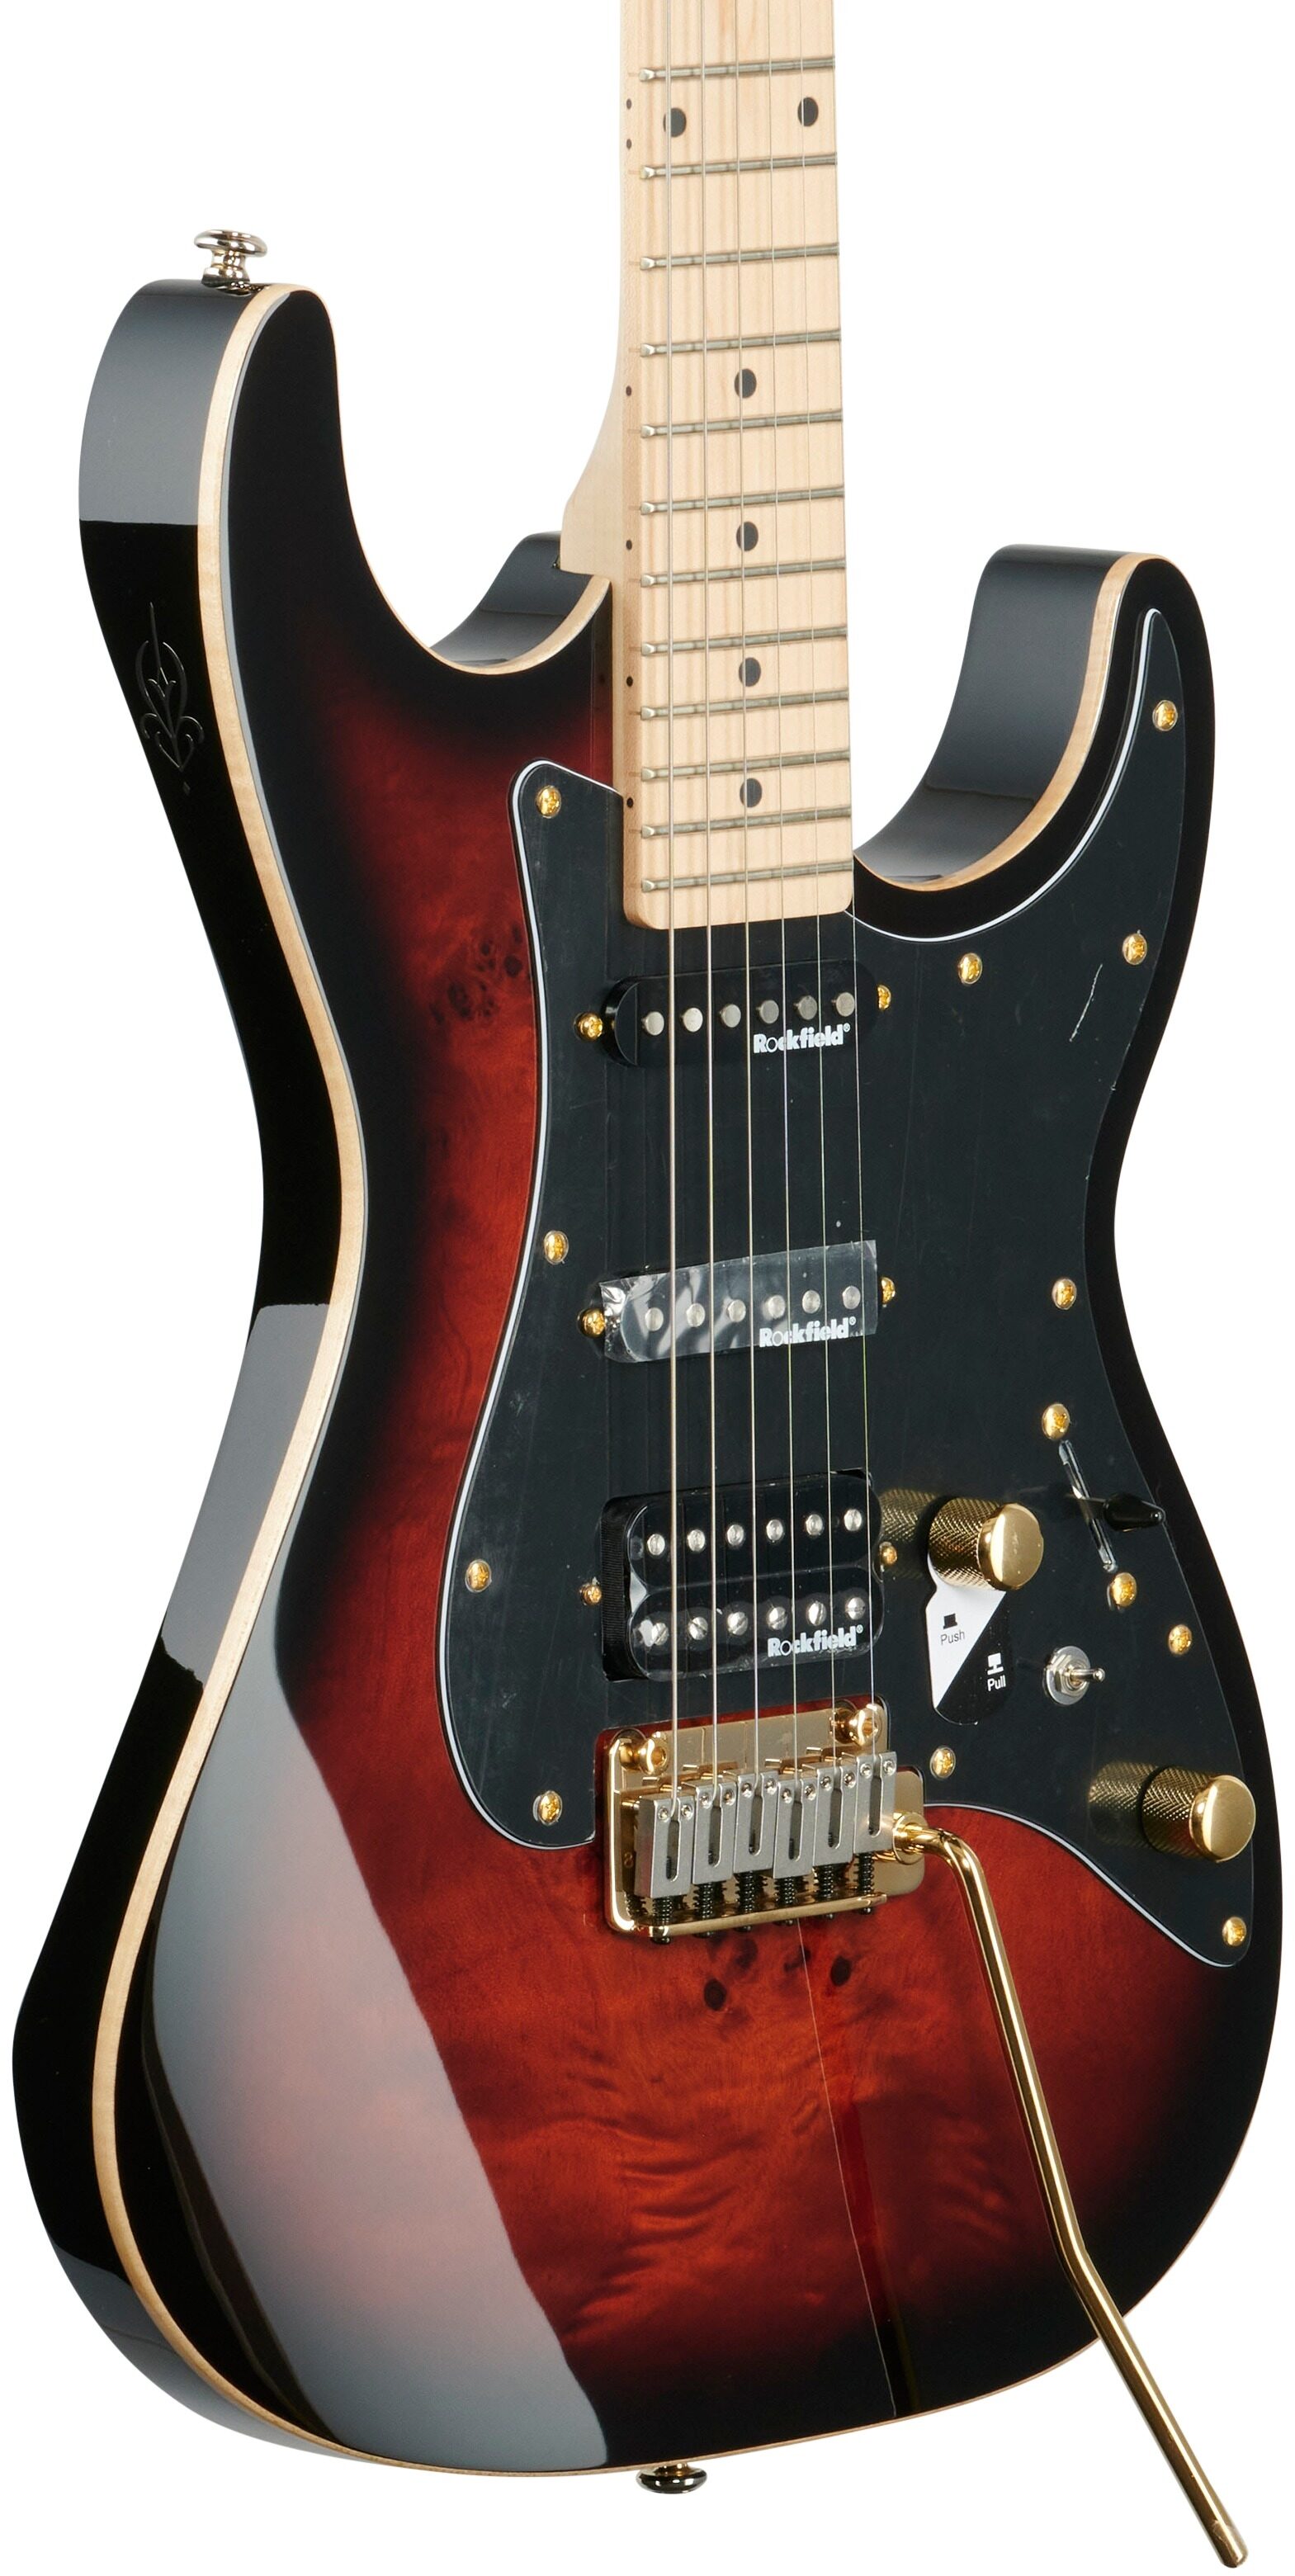 Michael Kelly CC60 Burl Burst Edition Electric Guitar 